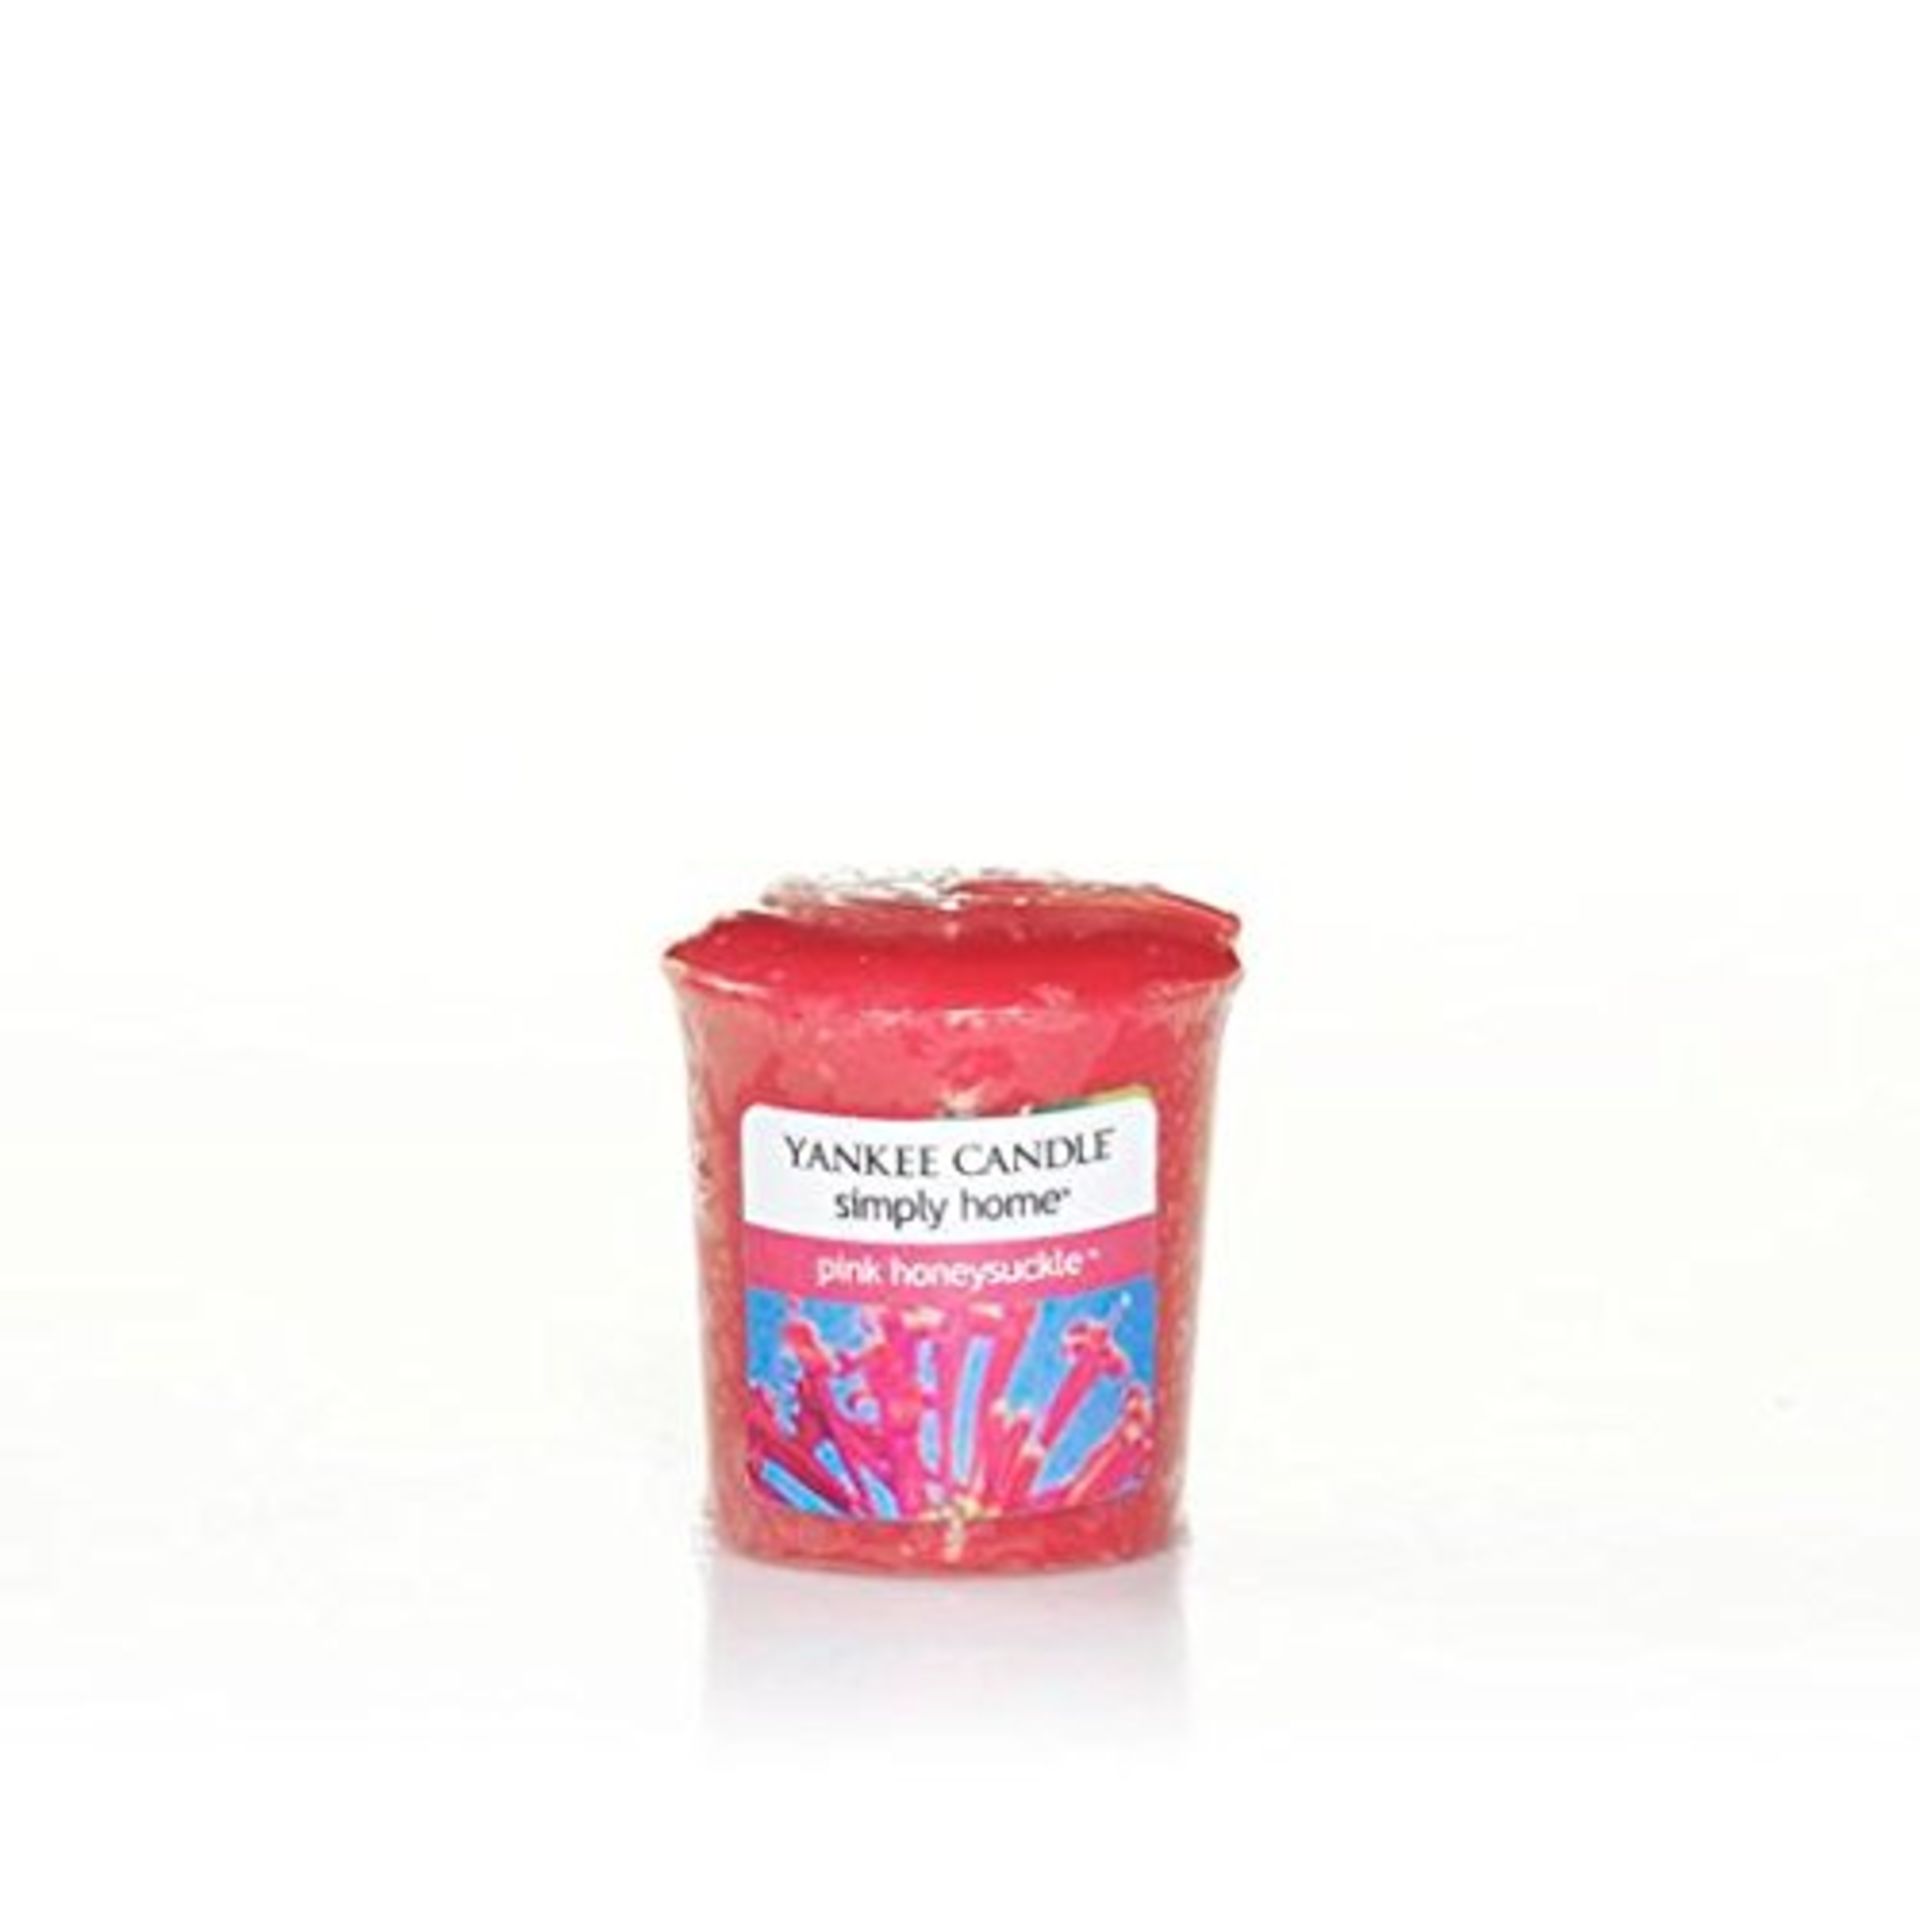 V Brand New 18 x Yankee Candle Votive Pink Honeysuckle 49g Amazon Price £71.10 X 2 YOUR BID PRICE TO - Image 2 of 2